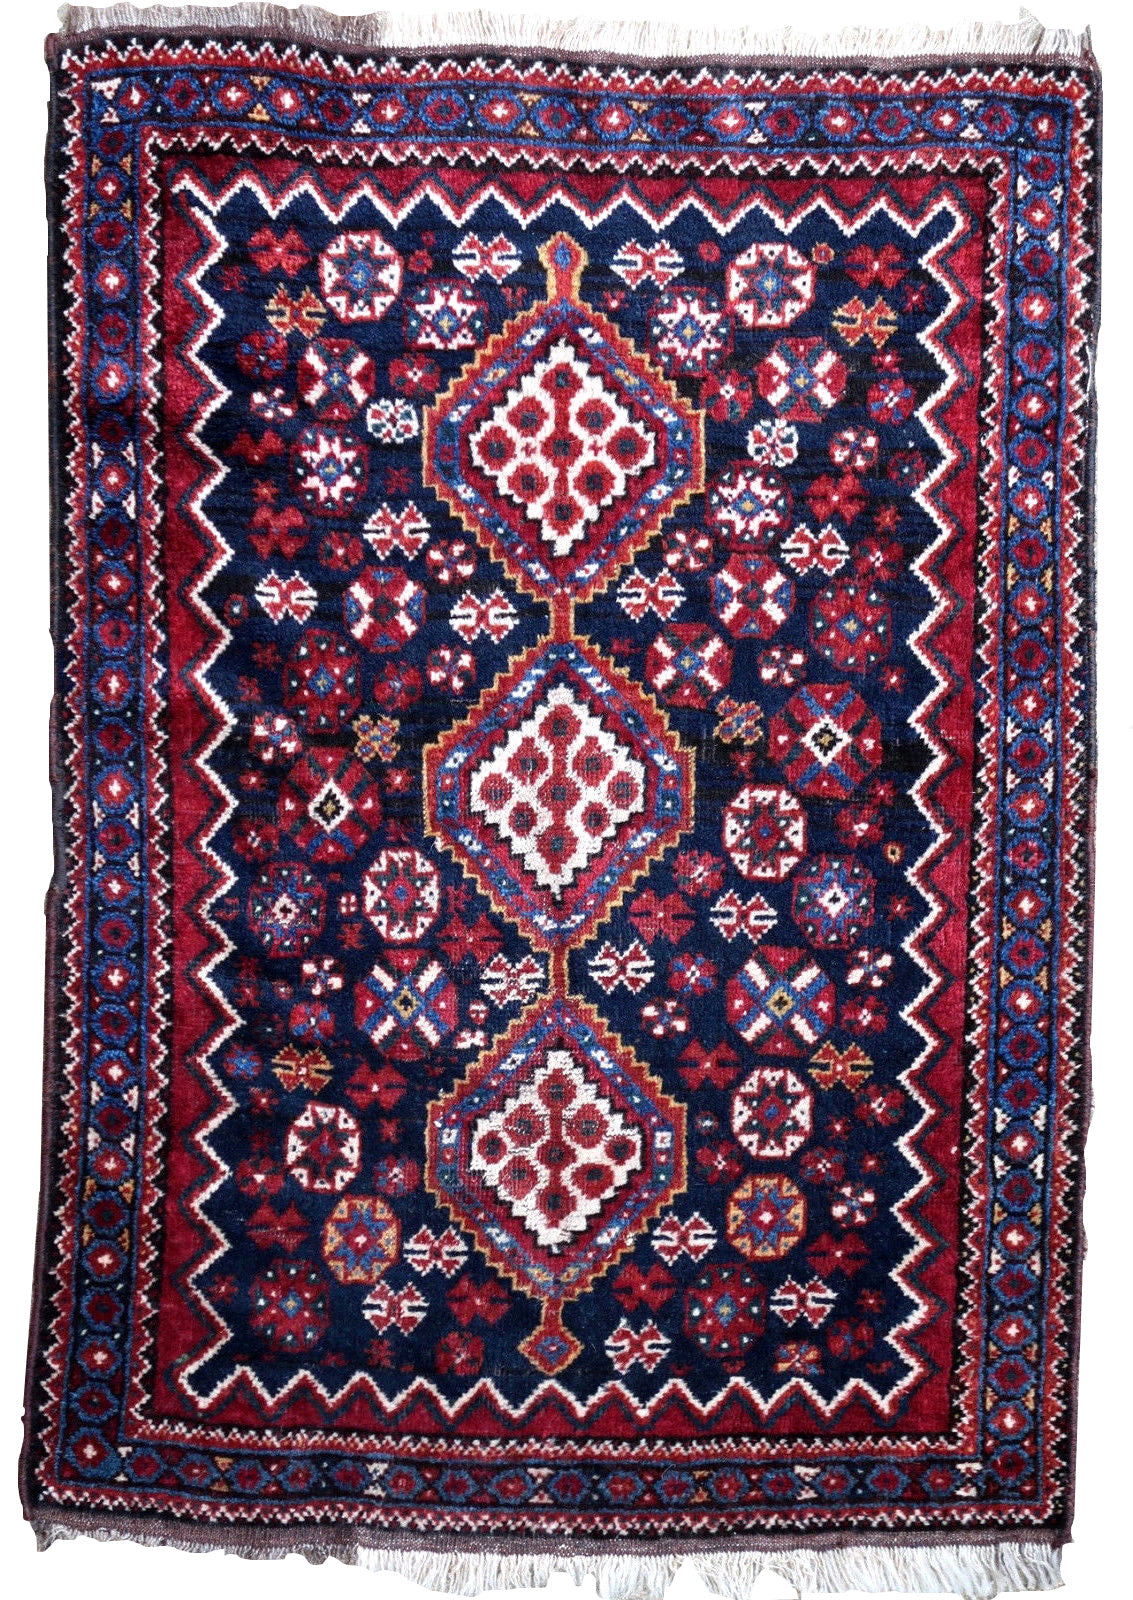 Handmade vintage Persian Shiraz rug 2.6' x 3.8' (80cm x 116cm) 1940s - 1P51